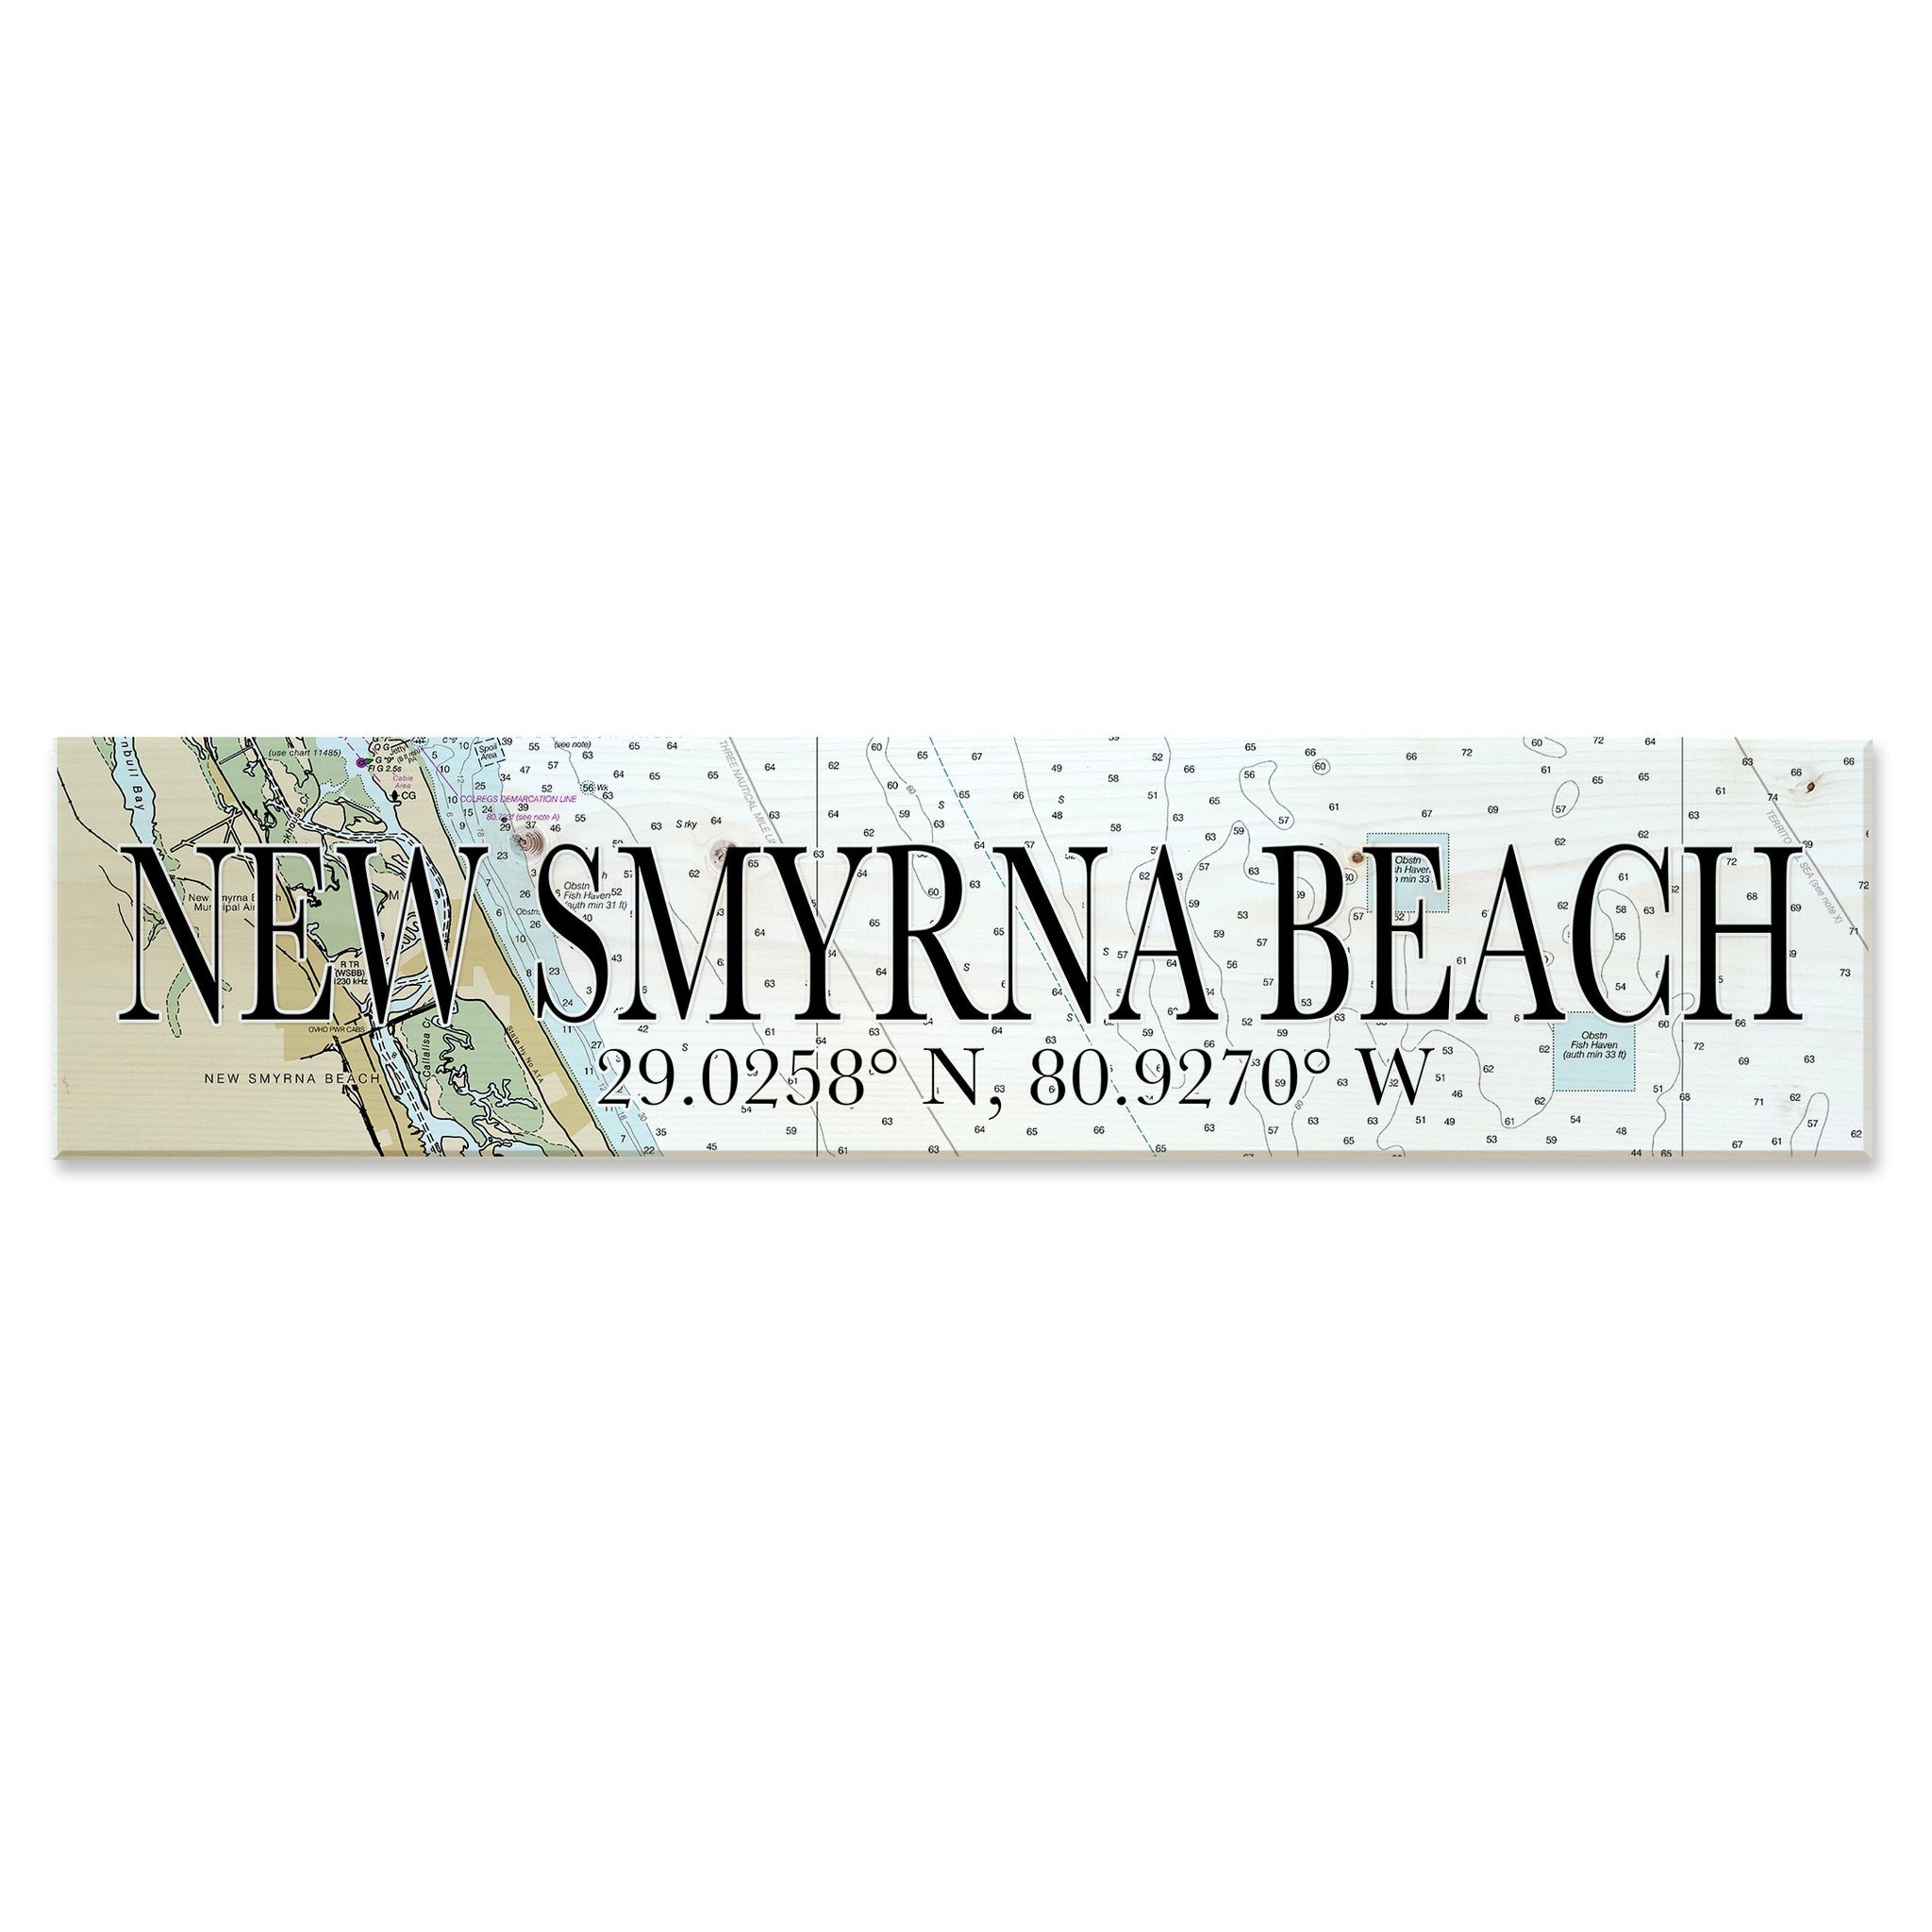 New Smyrna Beach, FL Coordinate Sign